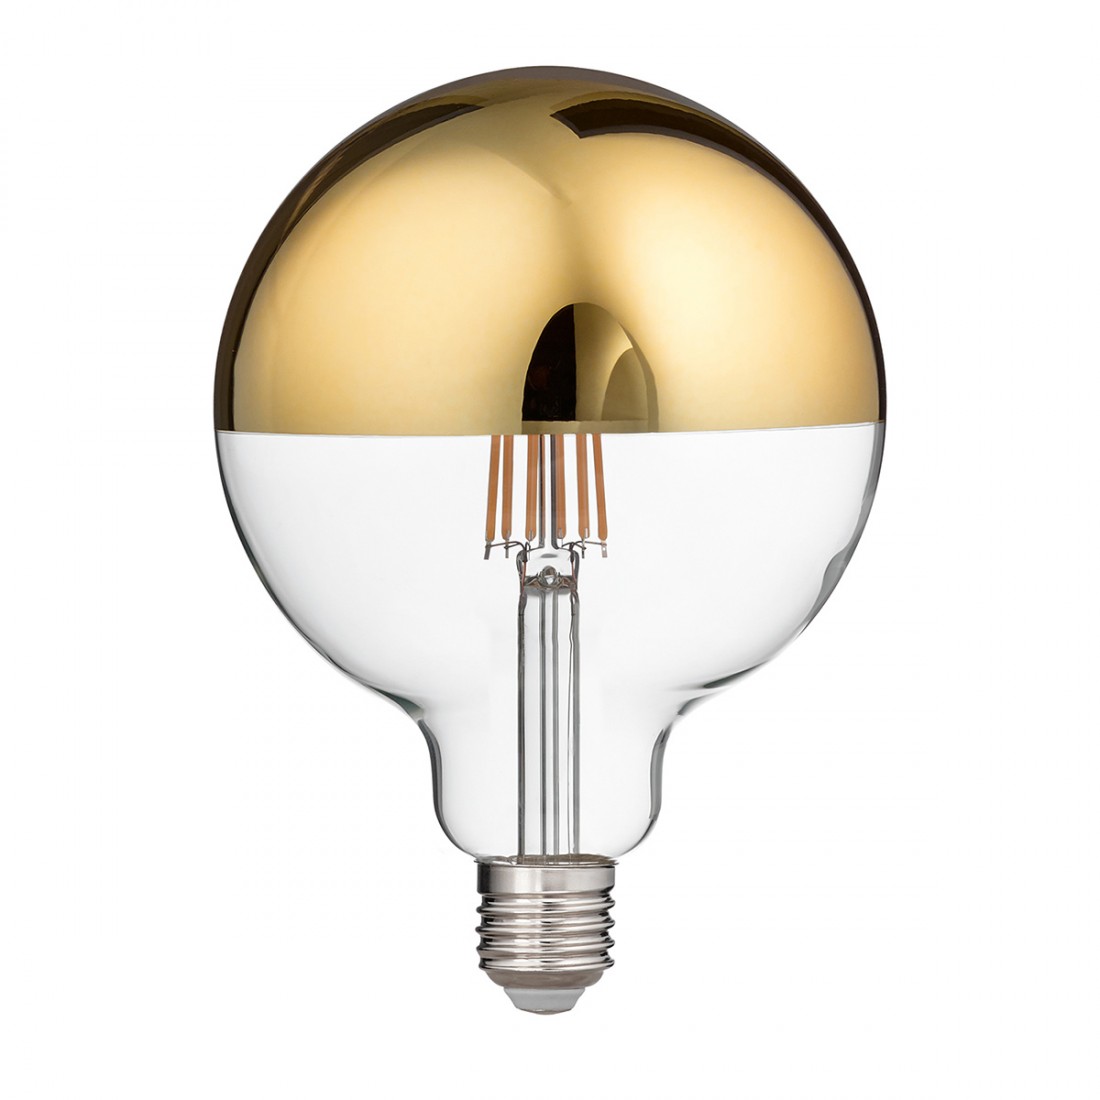 Lampada a LED sfera con cupola colorata - E27